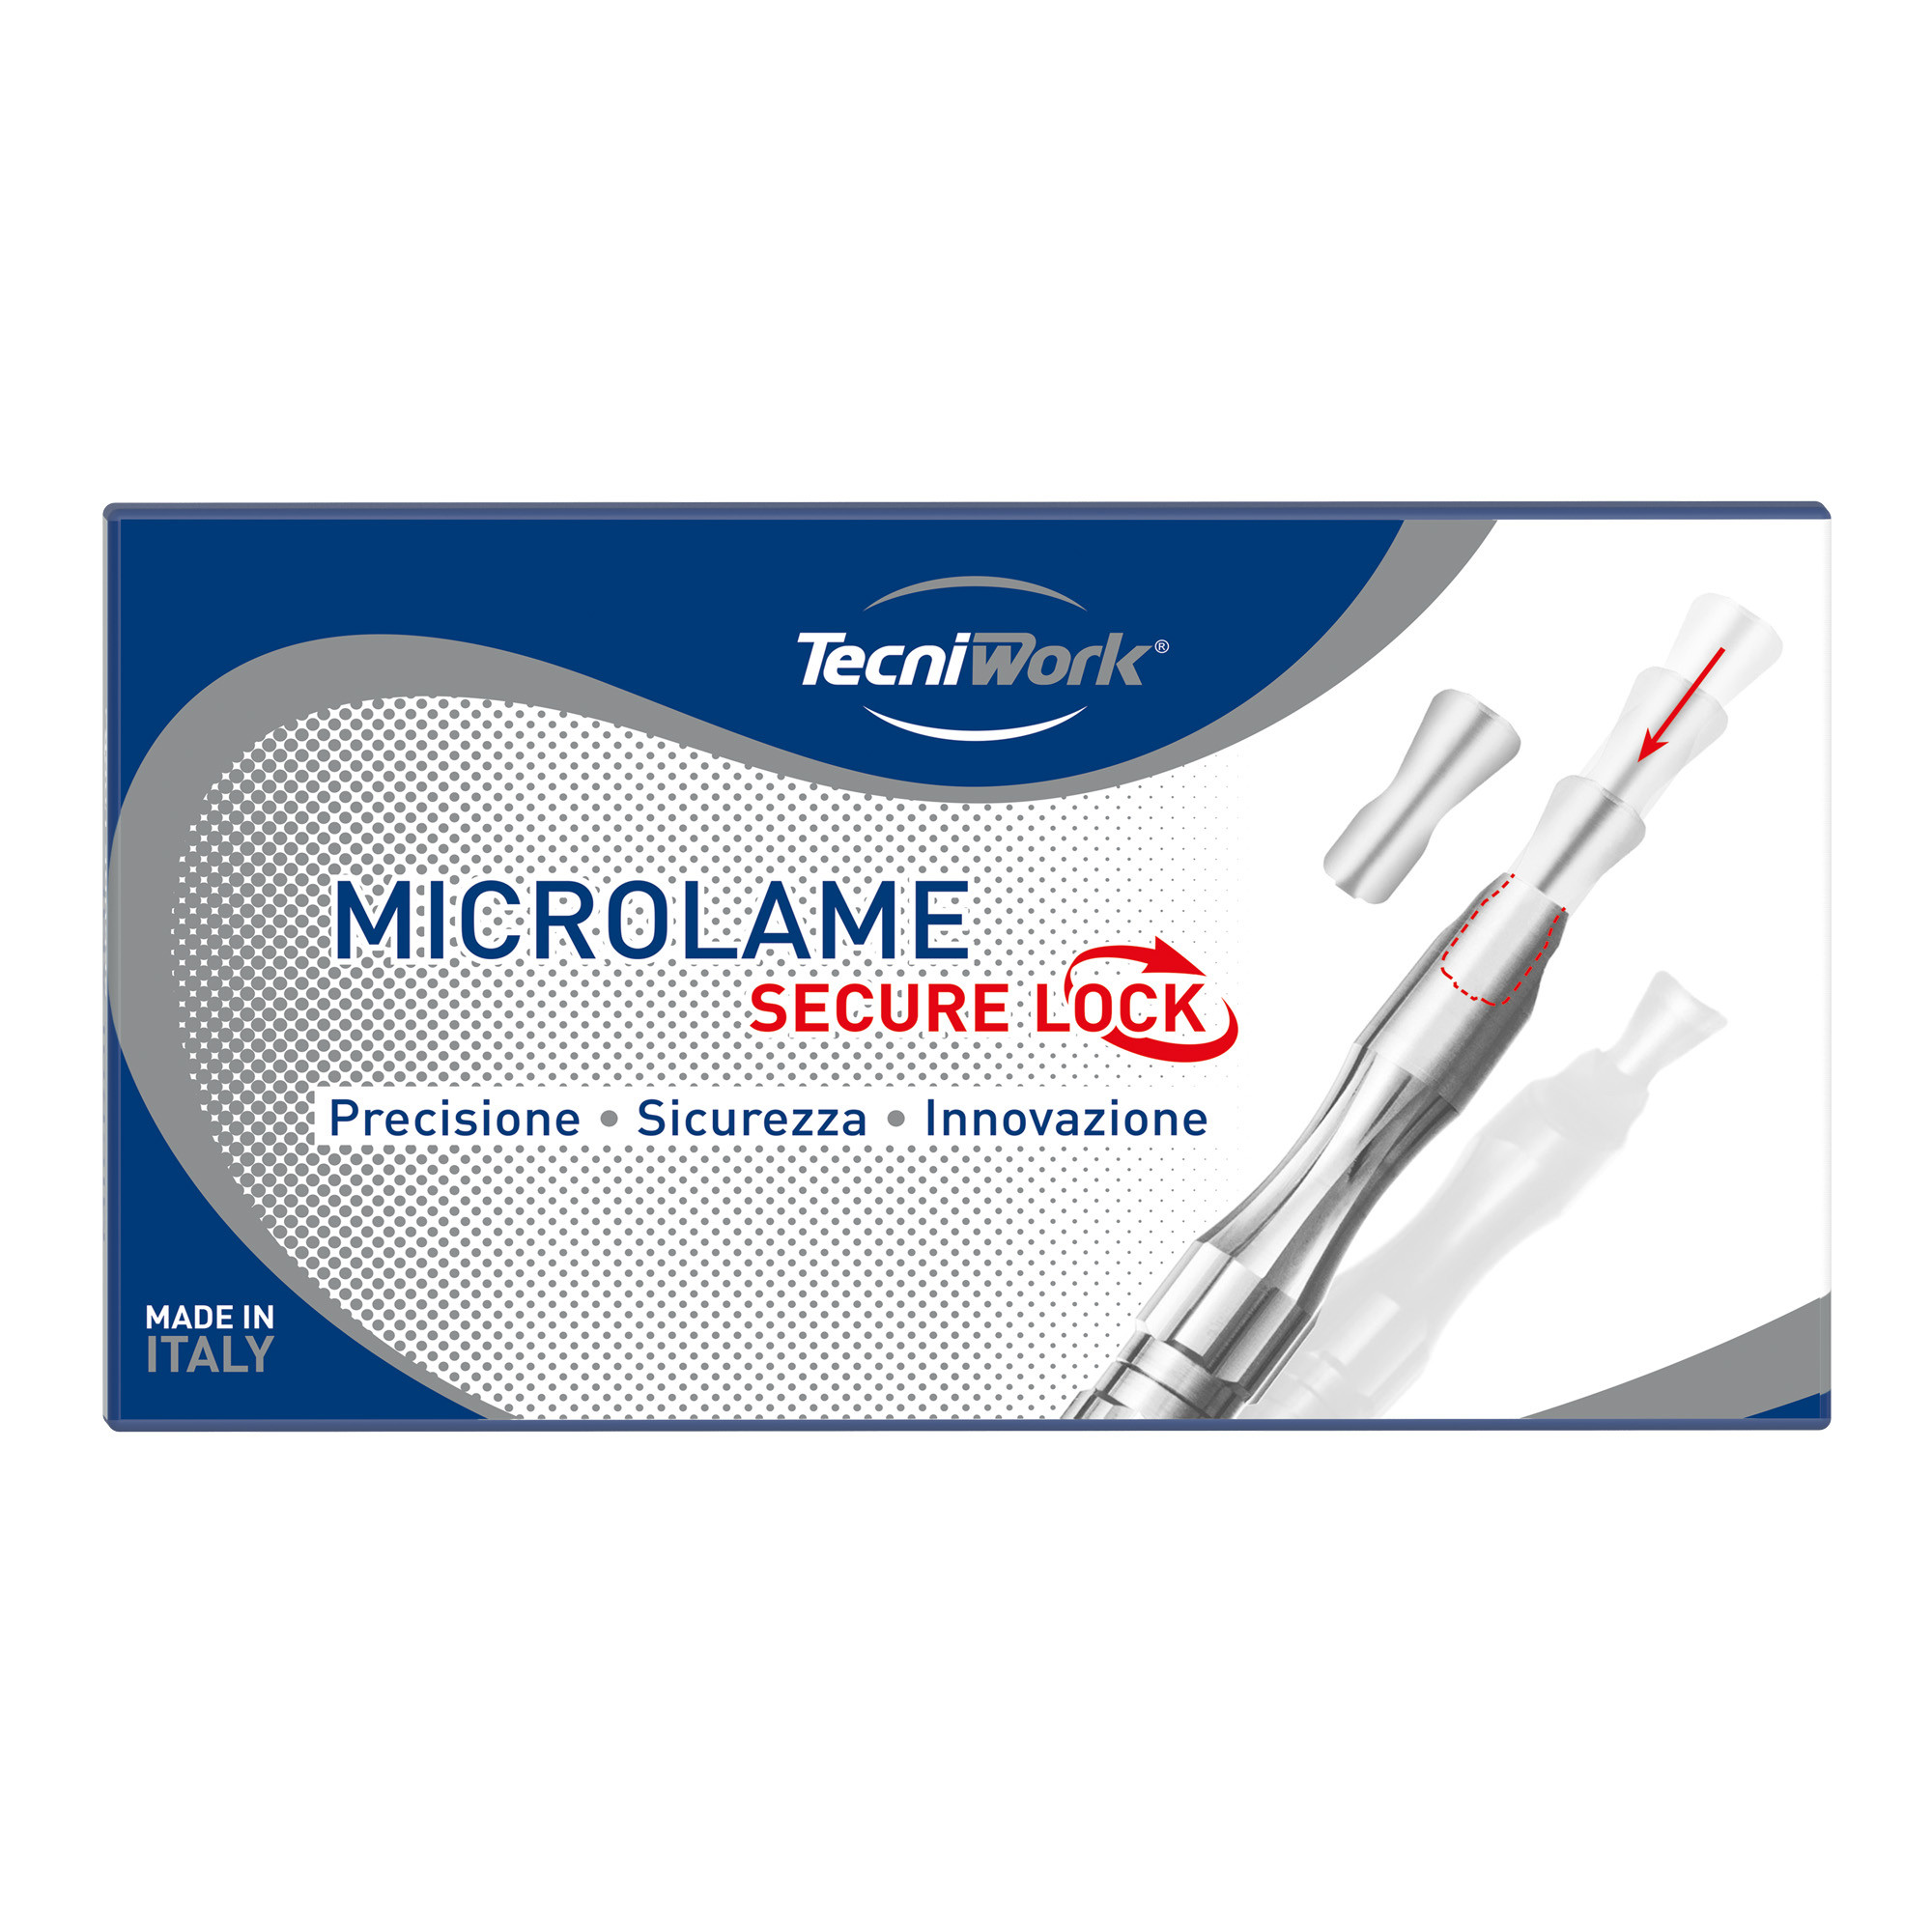 Microlame professionali singole sterili e monouso Secure Lock misura 1 50 pz